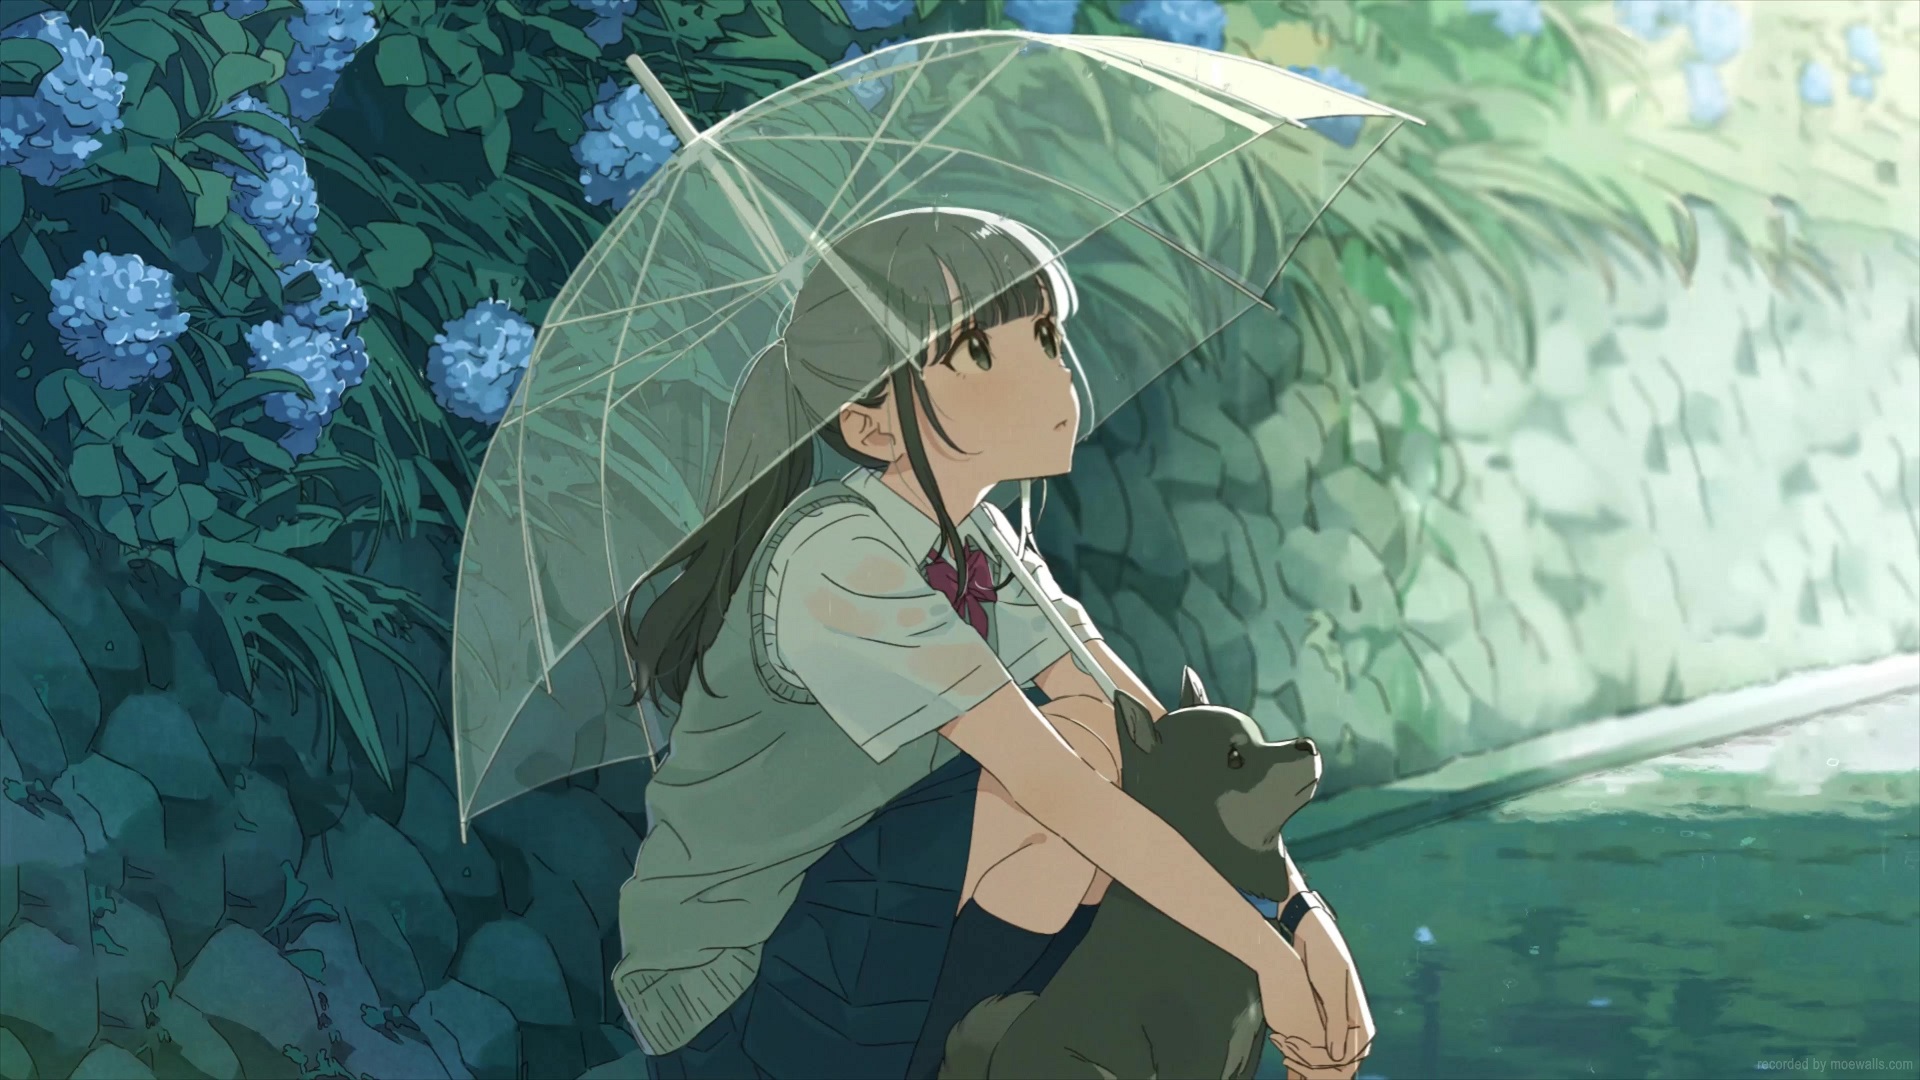 Sad Anime Girl With Umbrella Wallpaper Download | MobCup